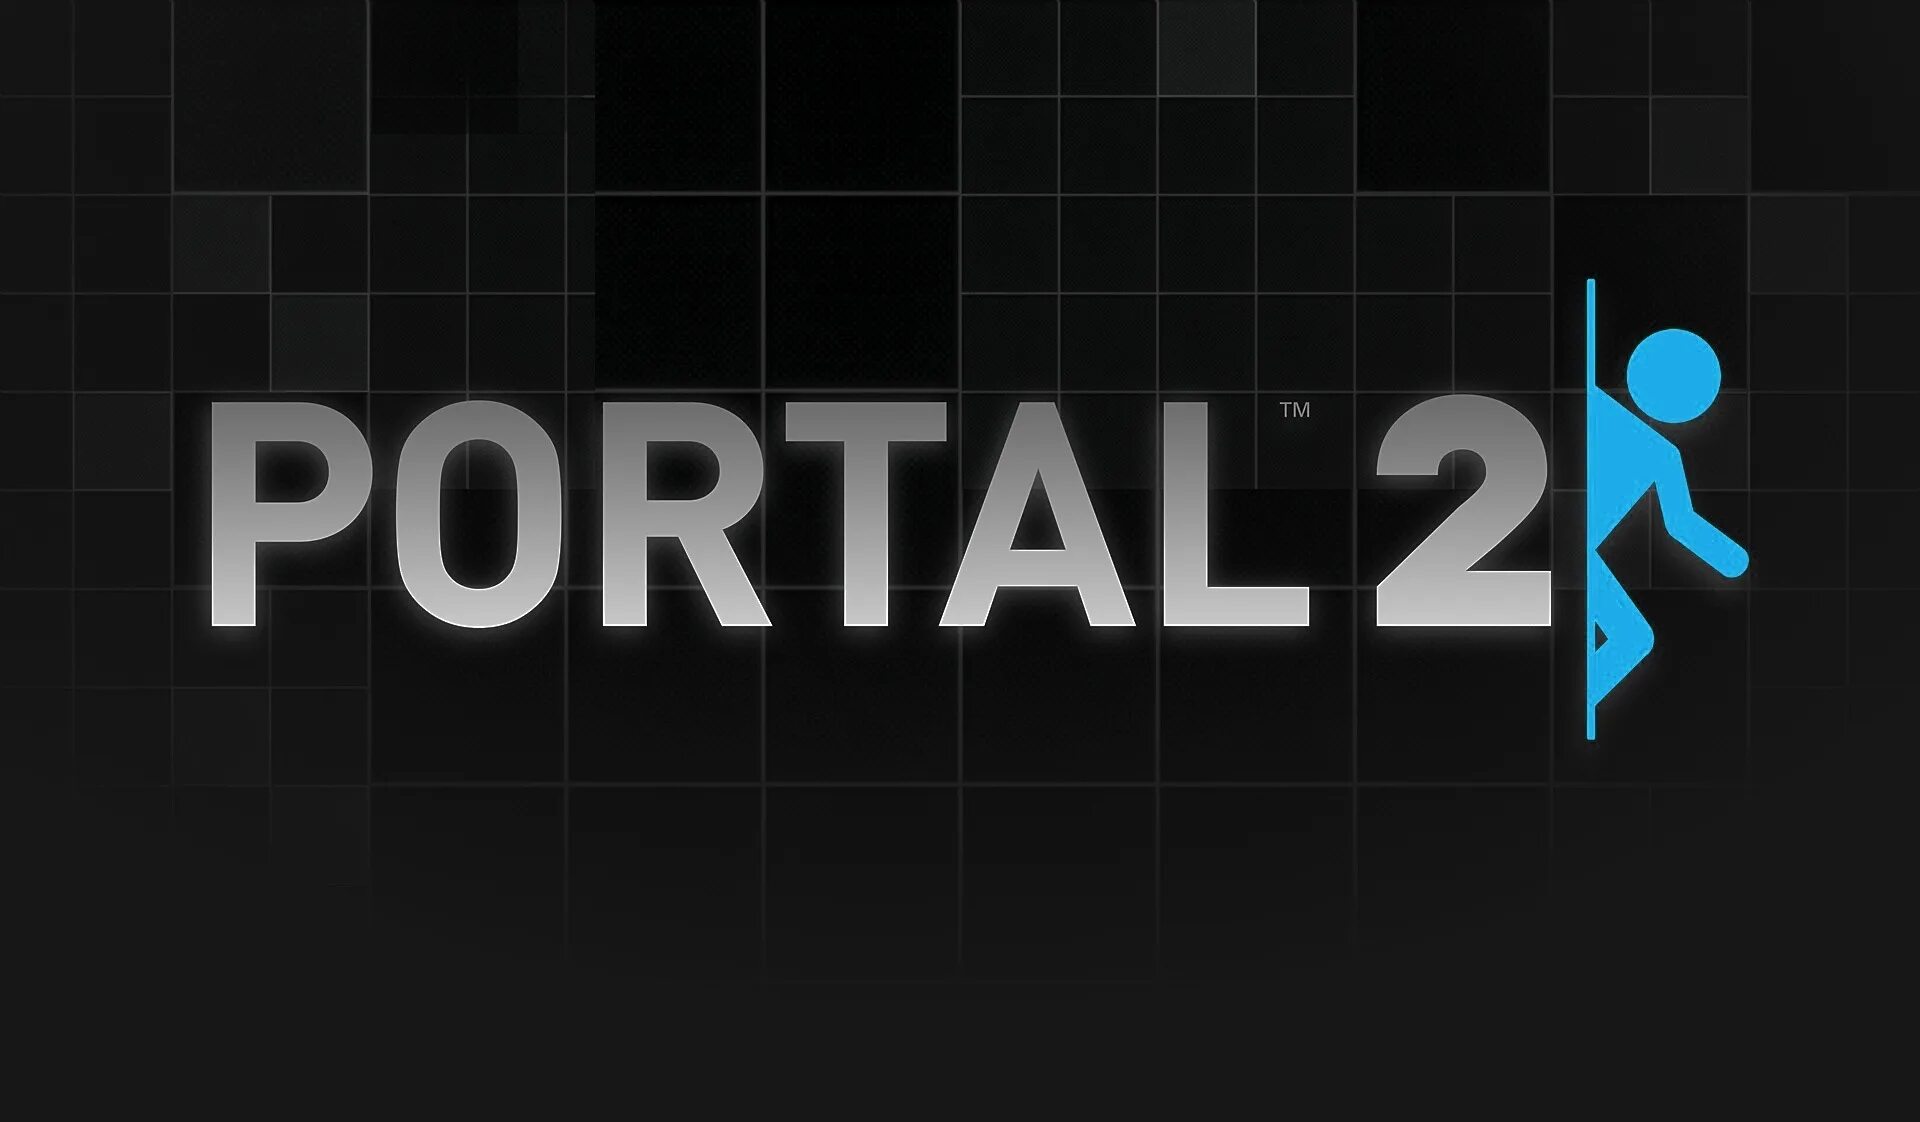 Portal listing. Портал 2. Portal игра. Иконка портал 2. Портал игра логотип.